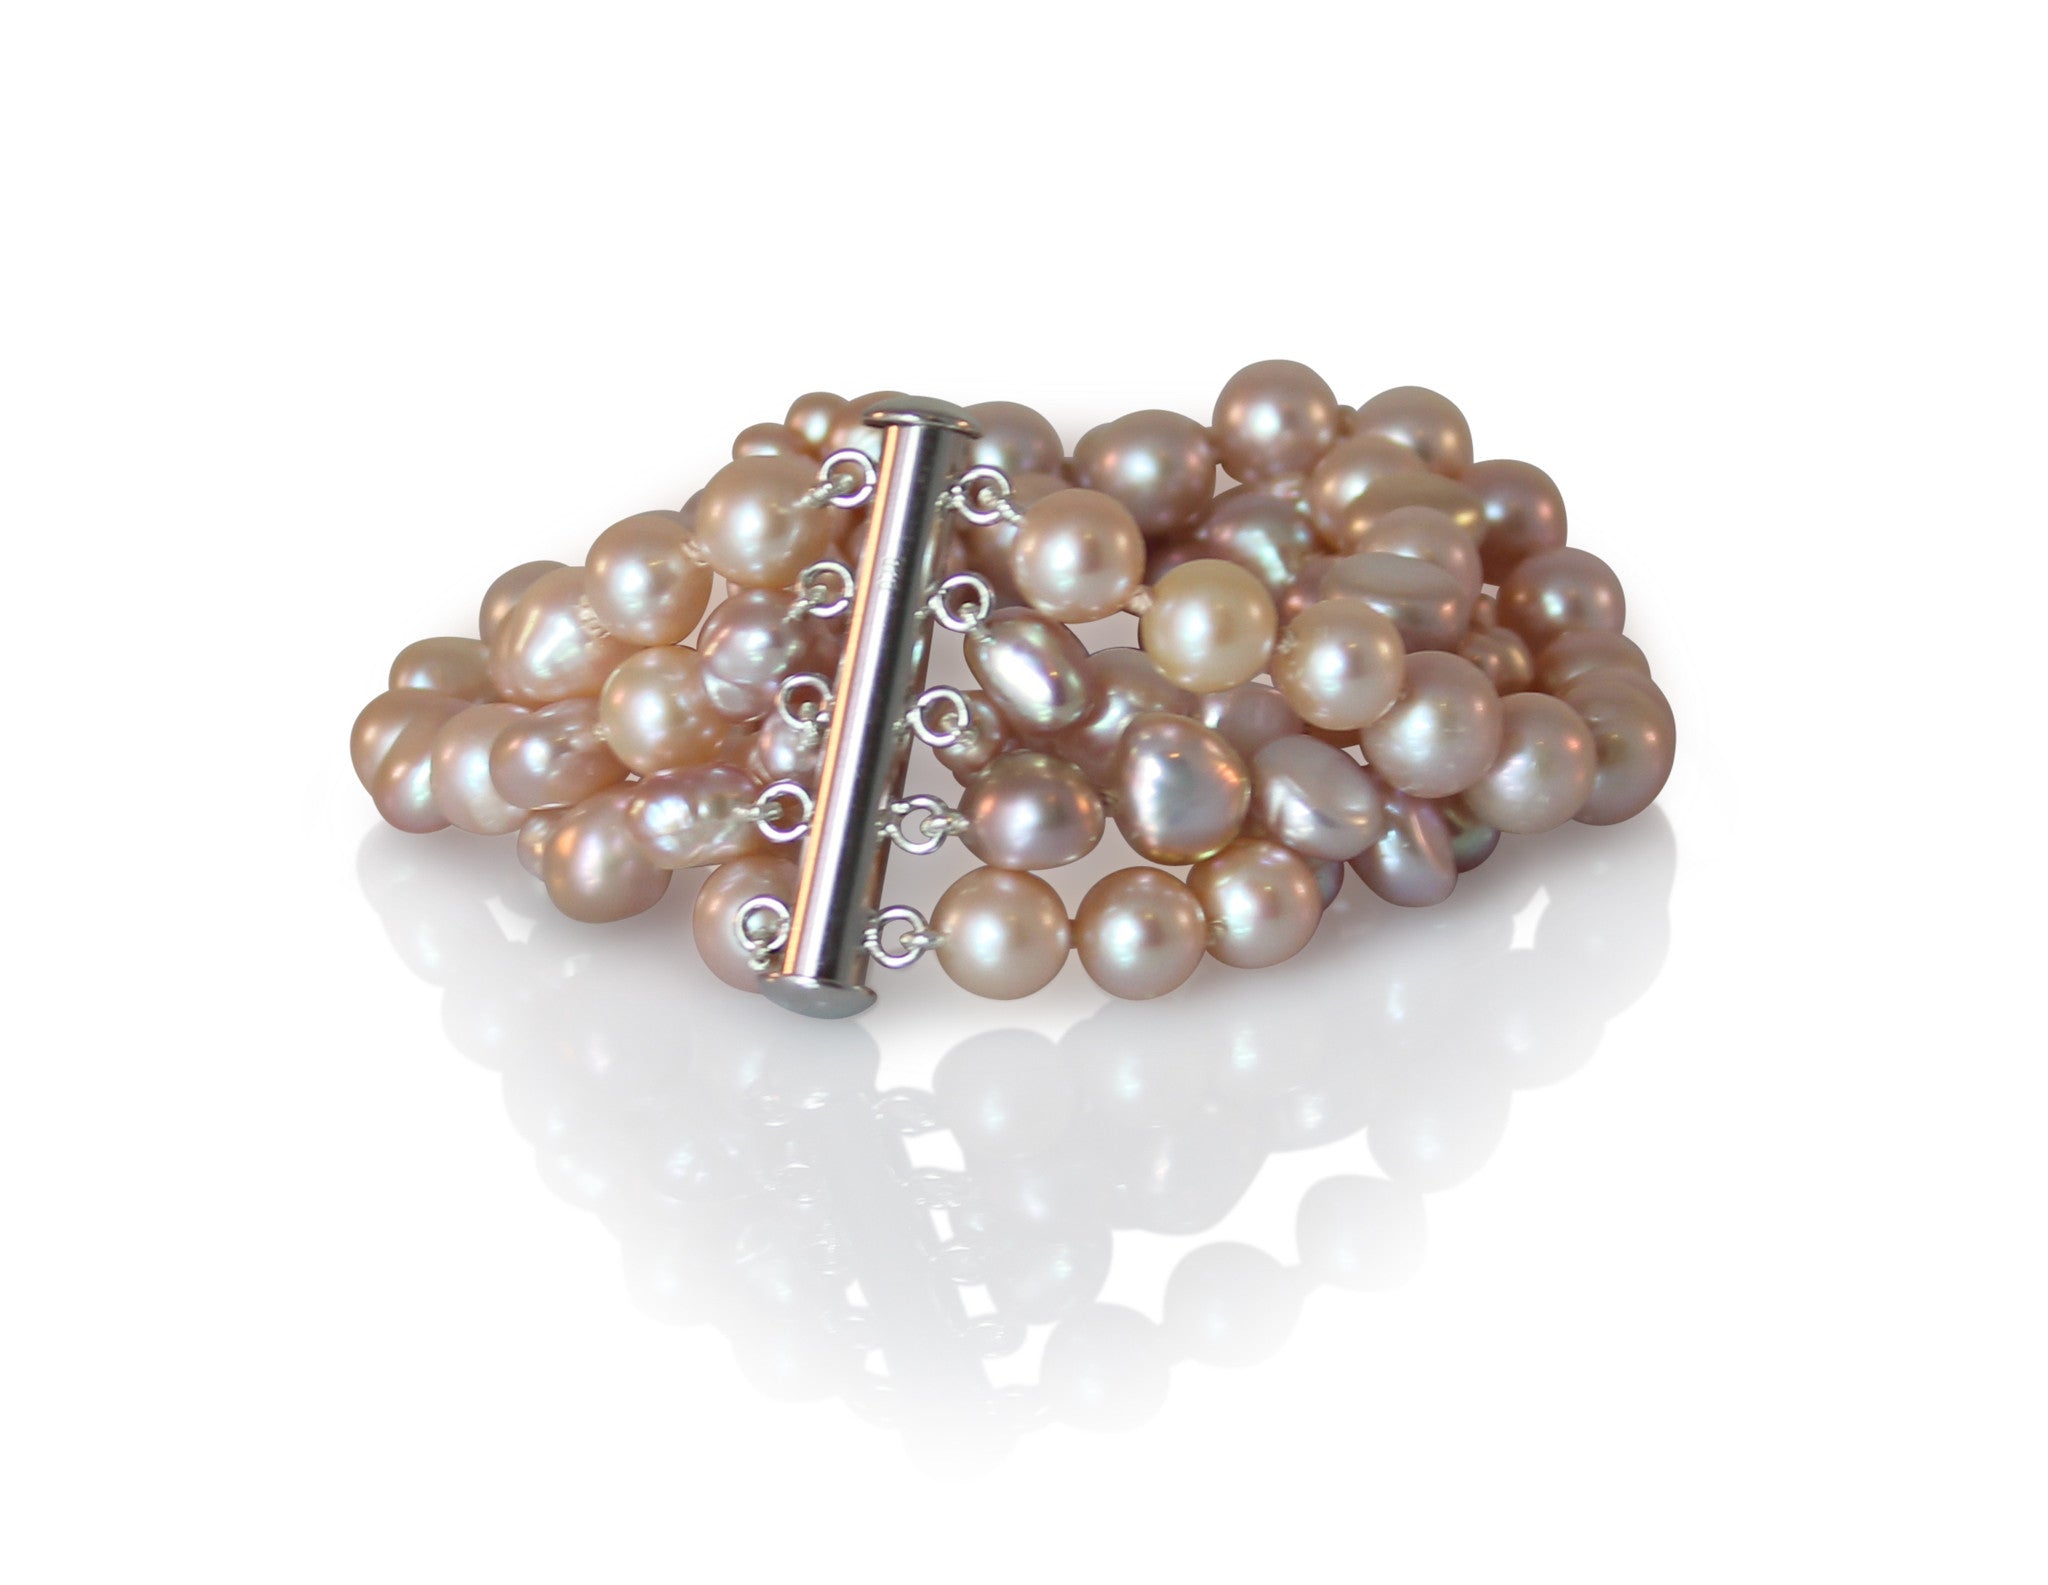 pink pearl bracelet